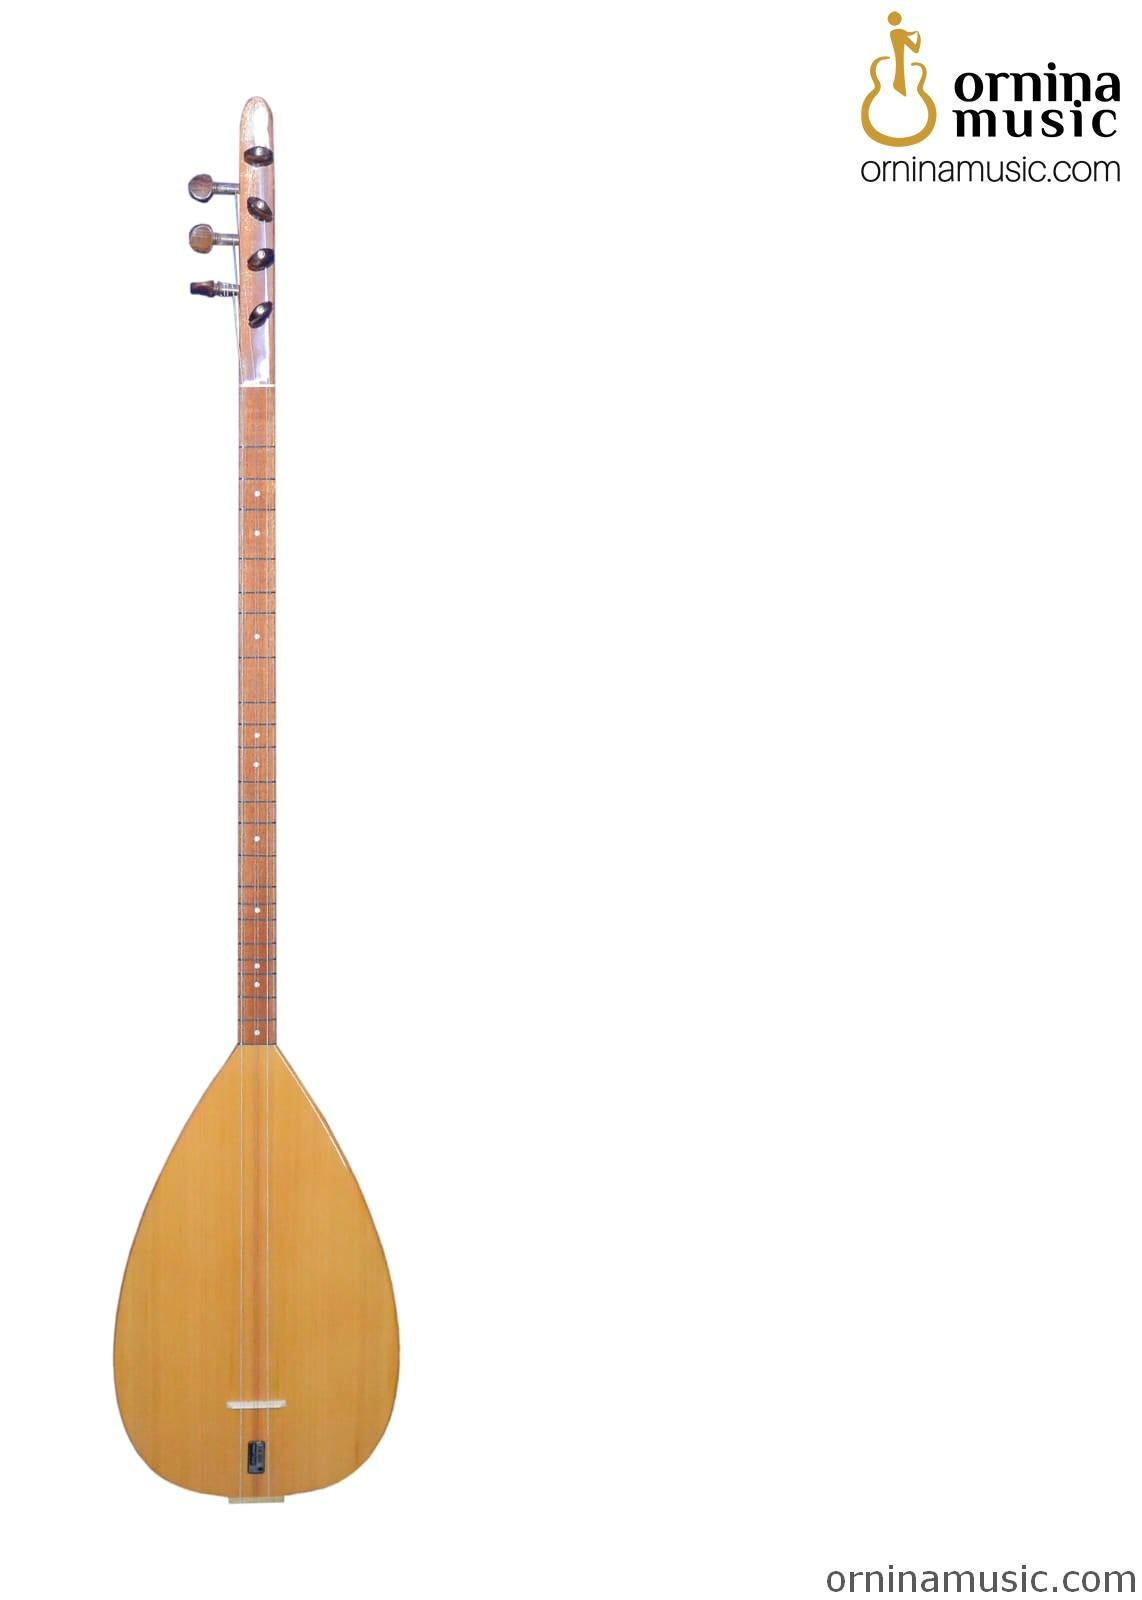 Baglama Saz instrument Kaufen - Ornina Music